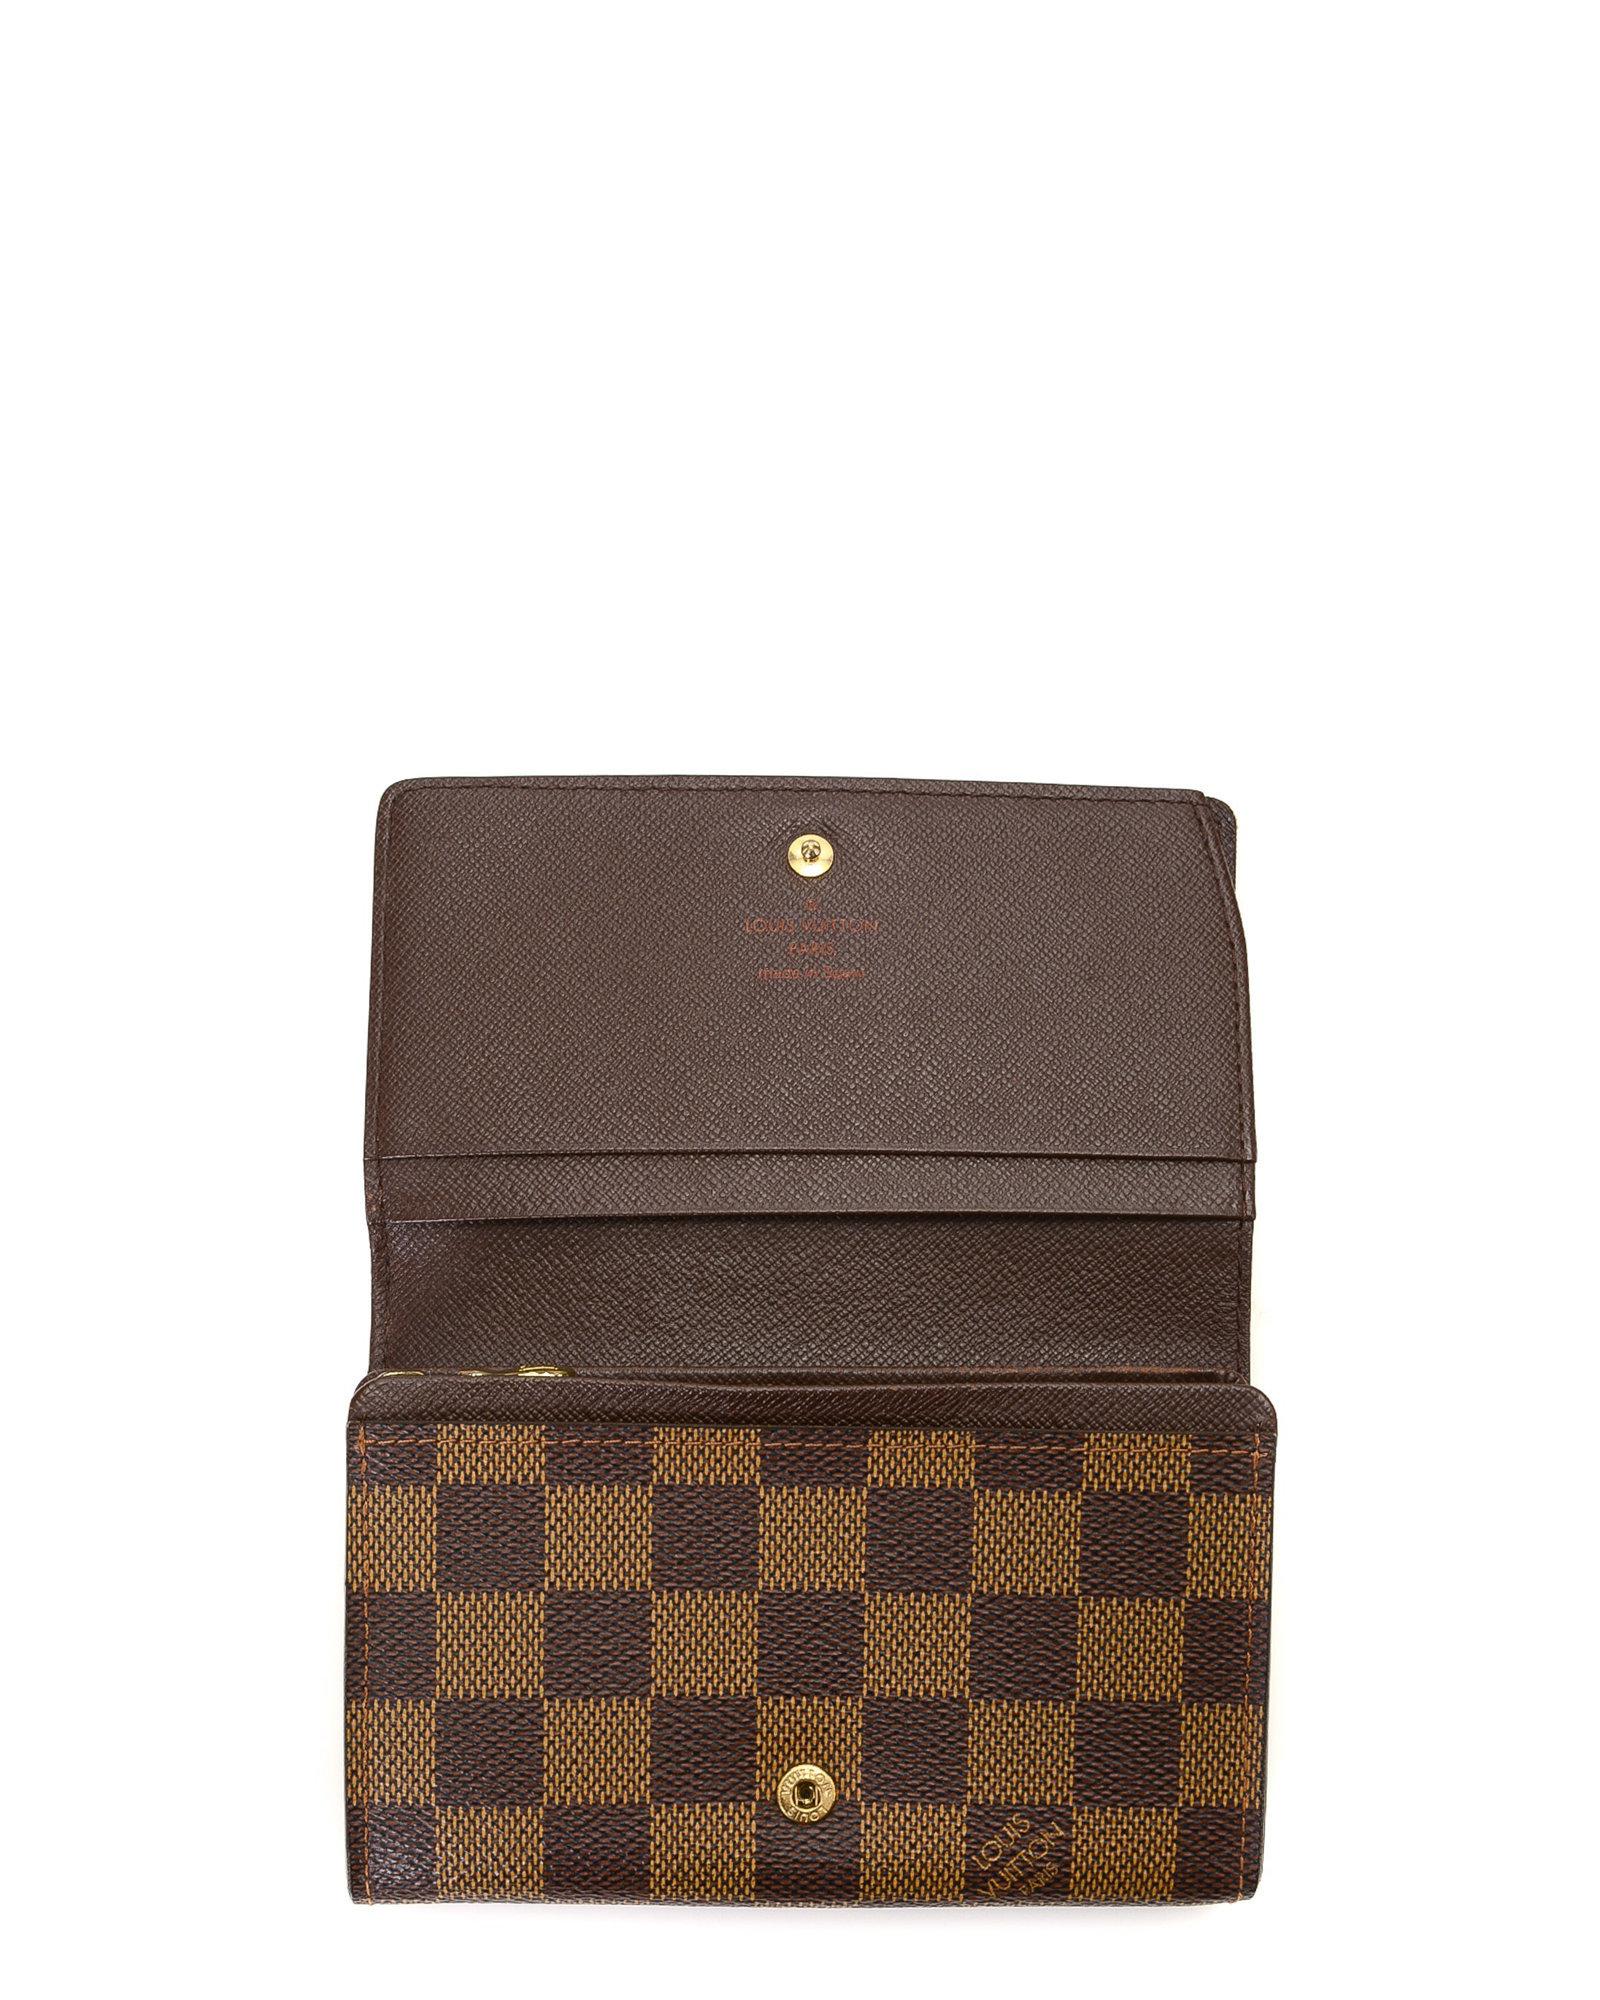 Lyst - Louis Vuitton Tresor Damier Ebene Wallet - Vintage in Brown